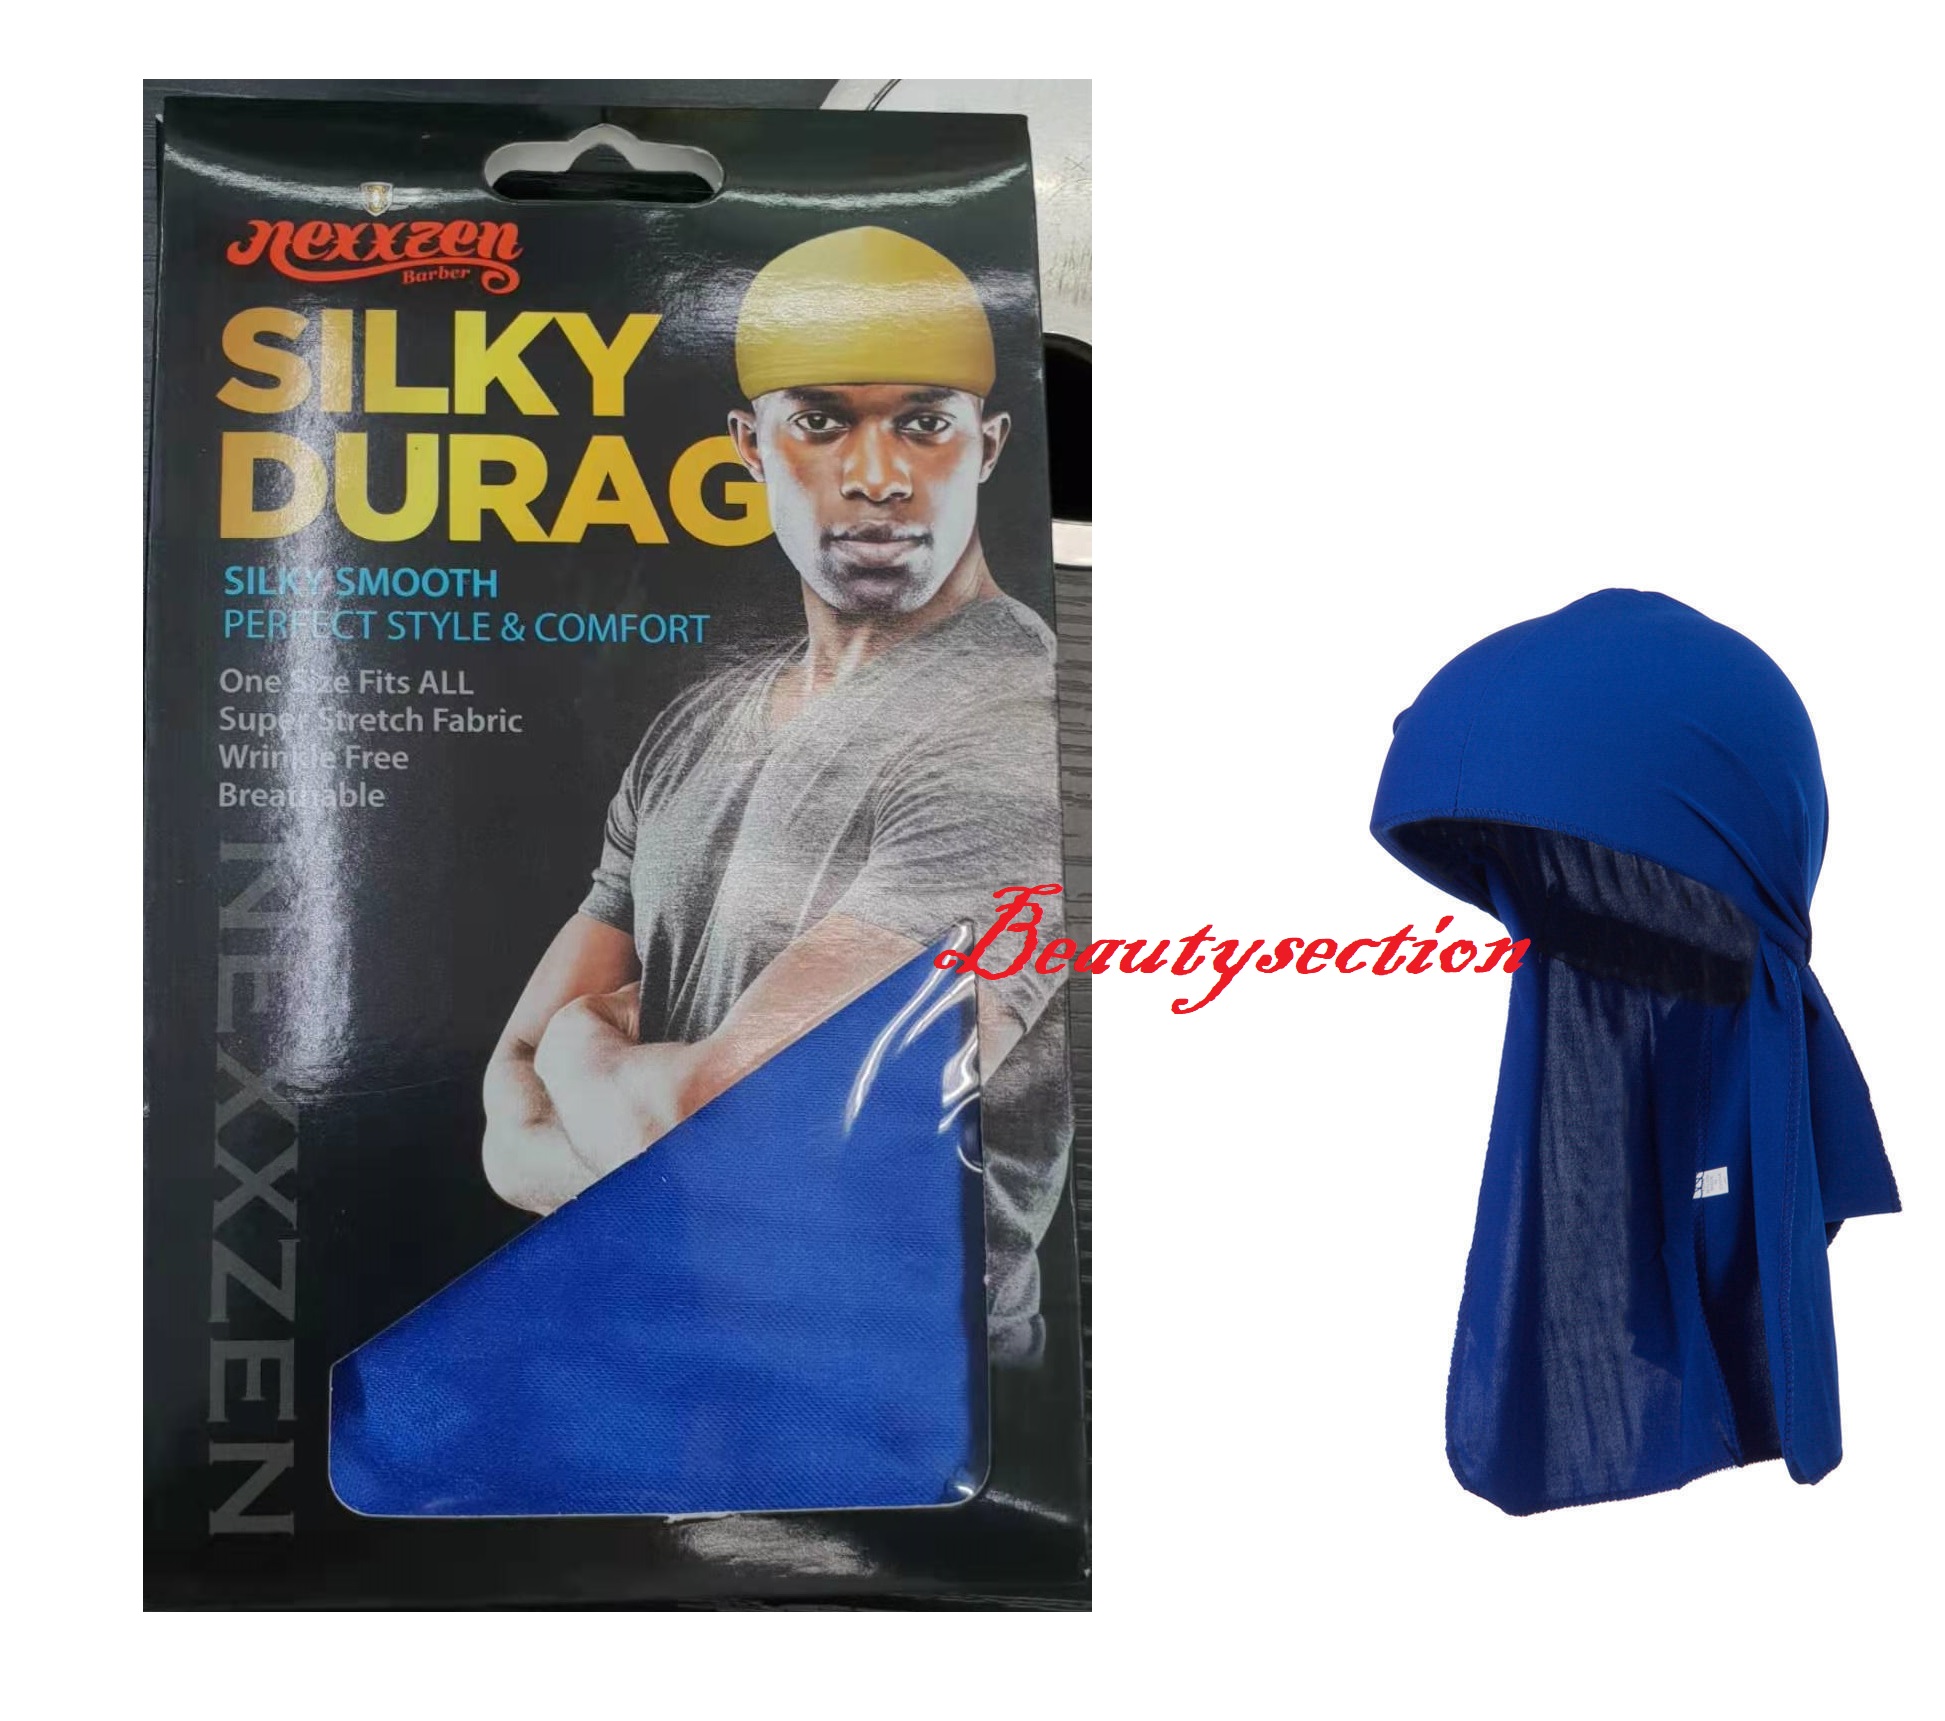 Durag Wave Cap Premium Quality Silky Aexxzen Barber